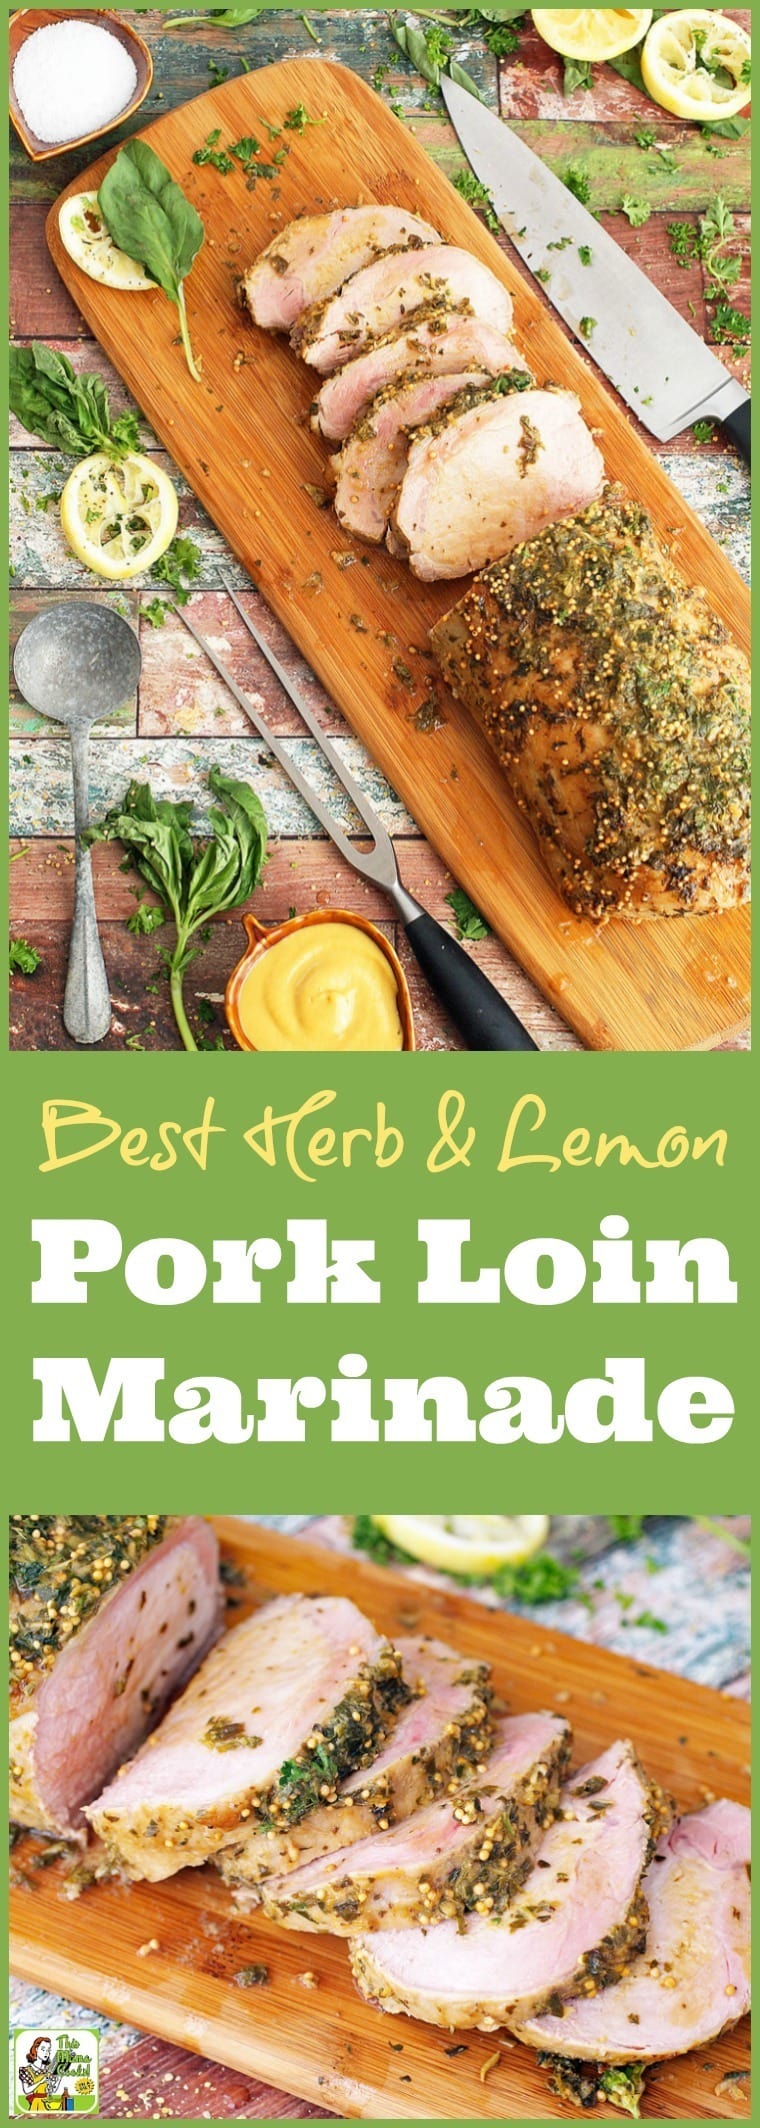 Best Herb & Lemon Pork Loin Marinade